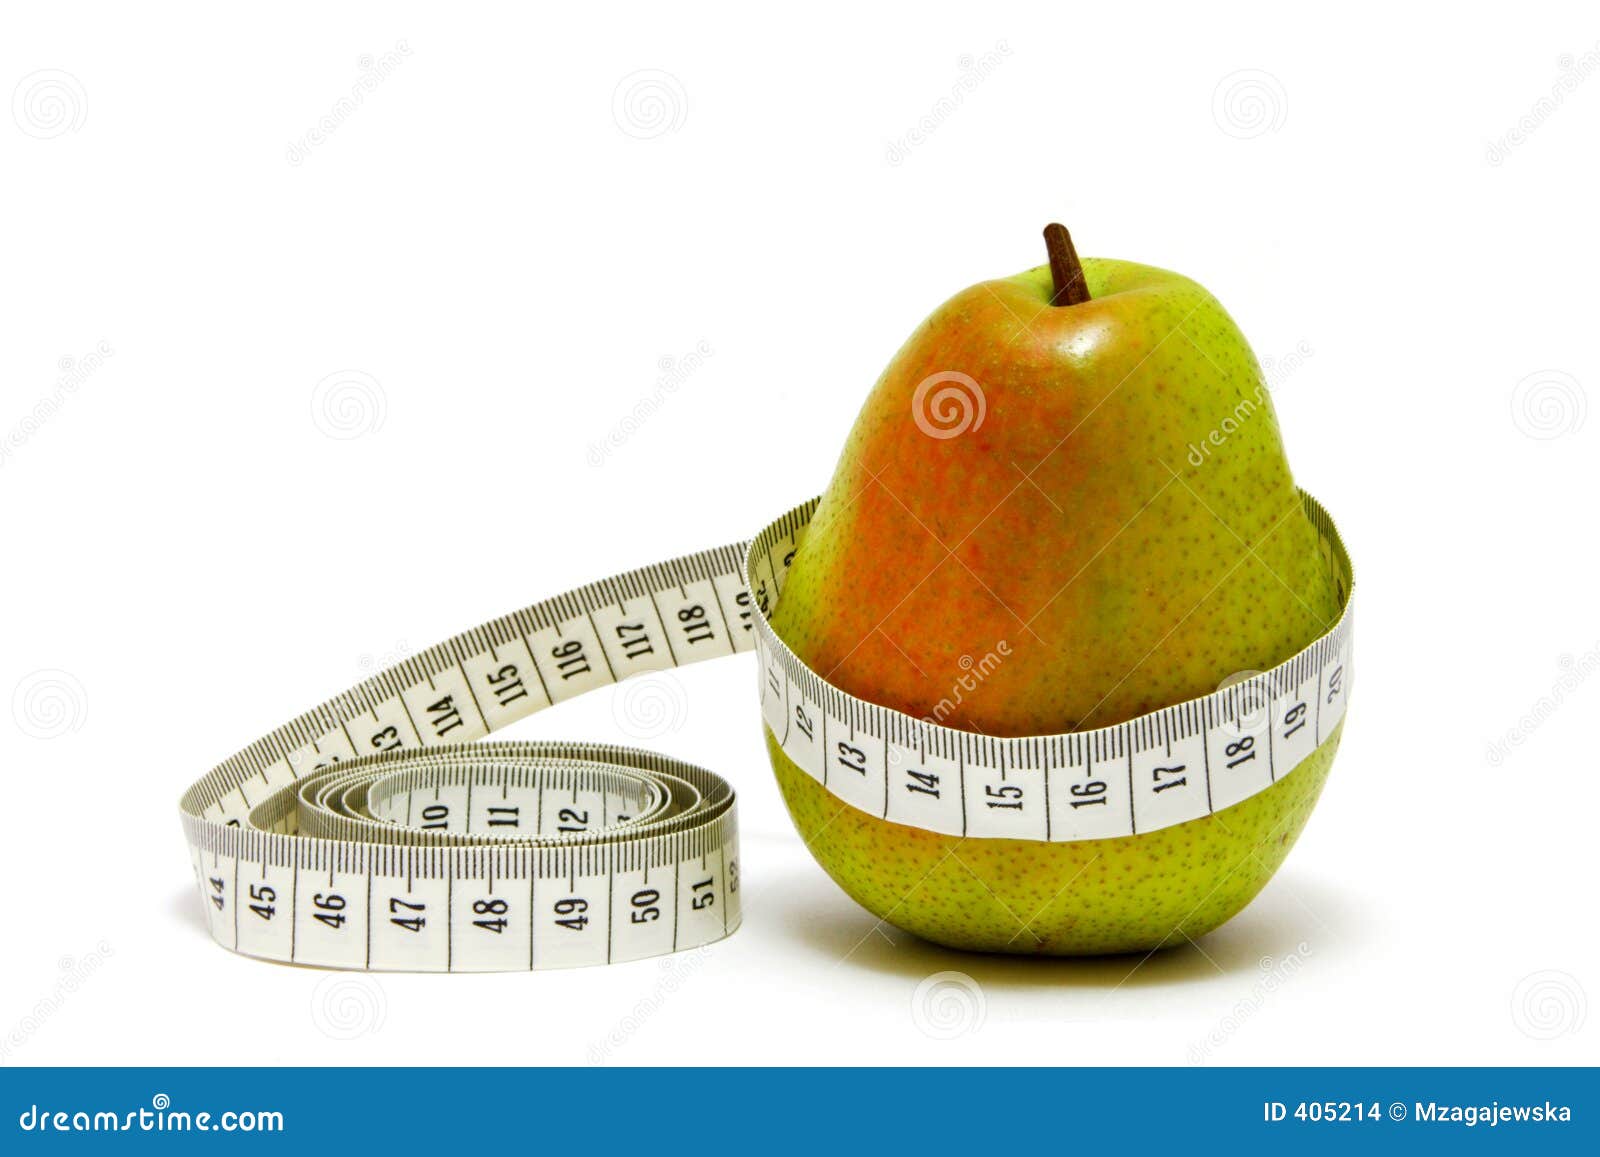 pears calories